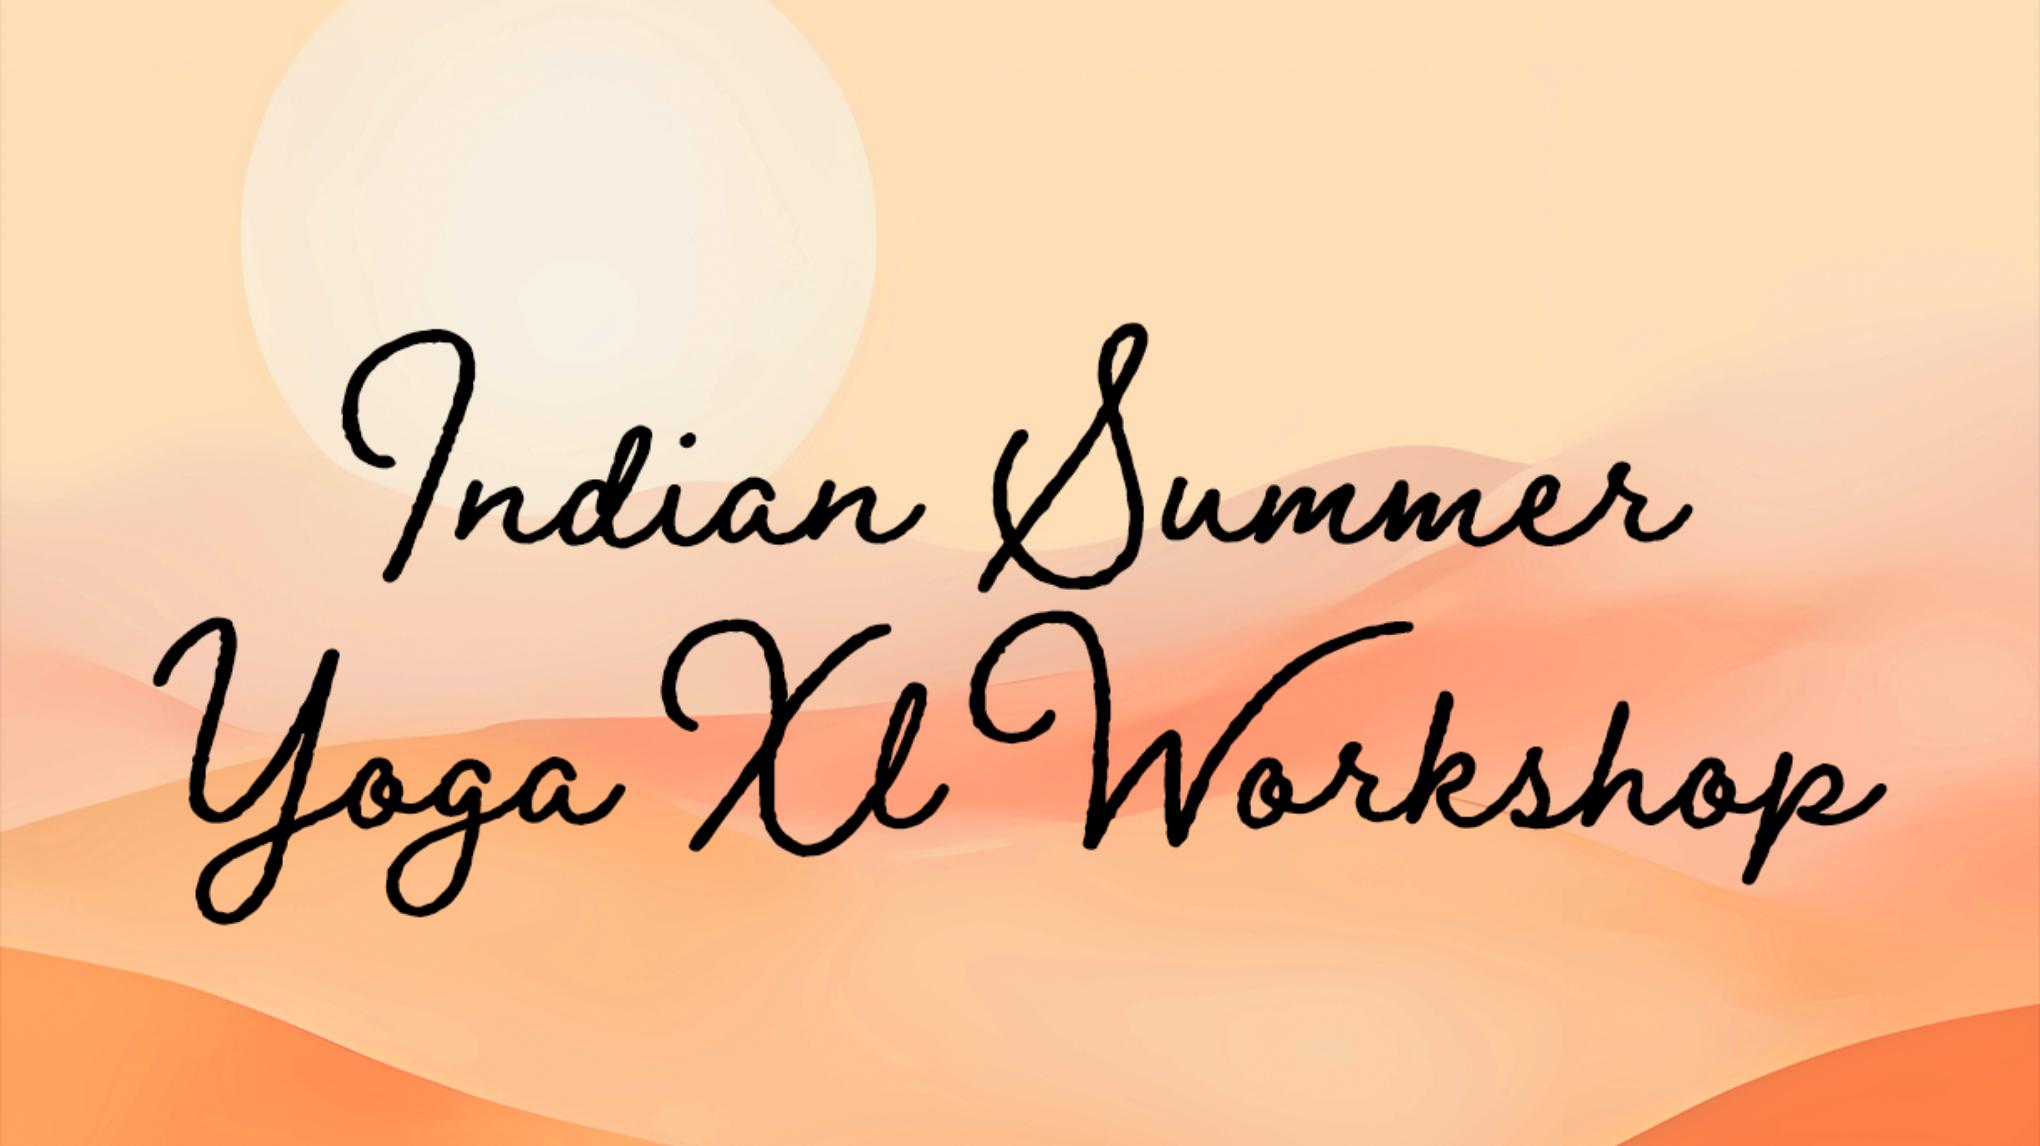 Selfcare Sunday: Indian Summer Yoga XL Workshop